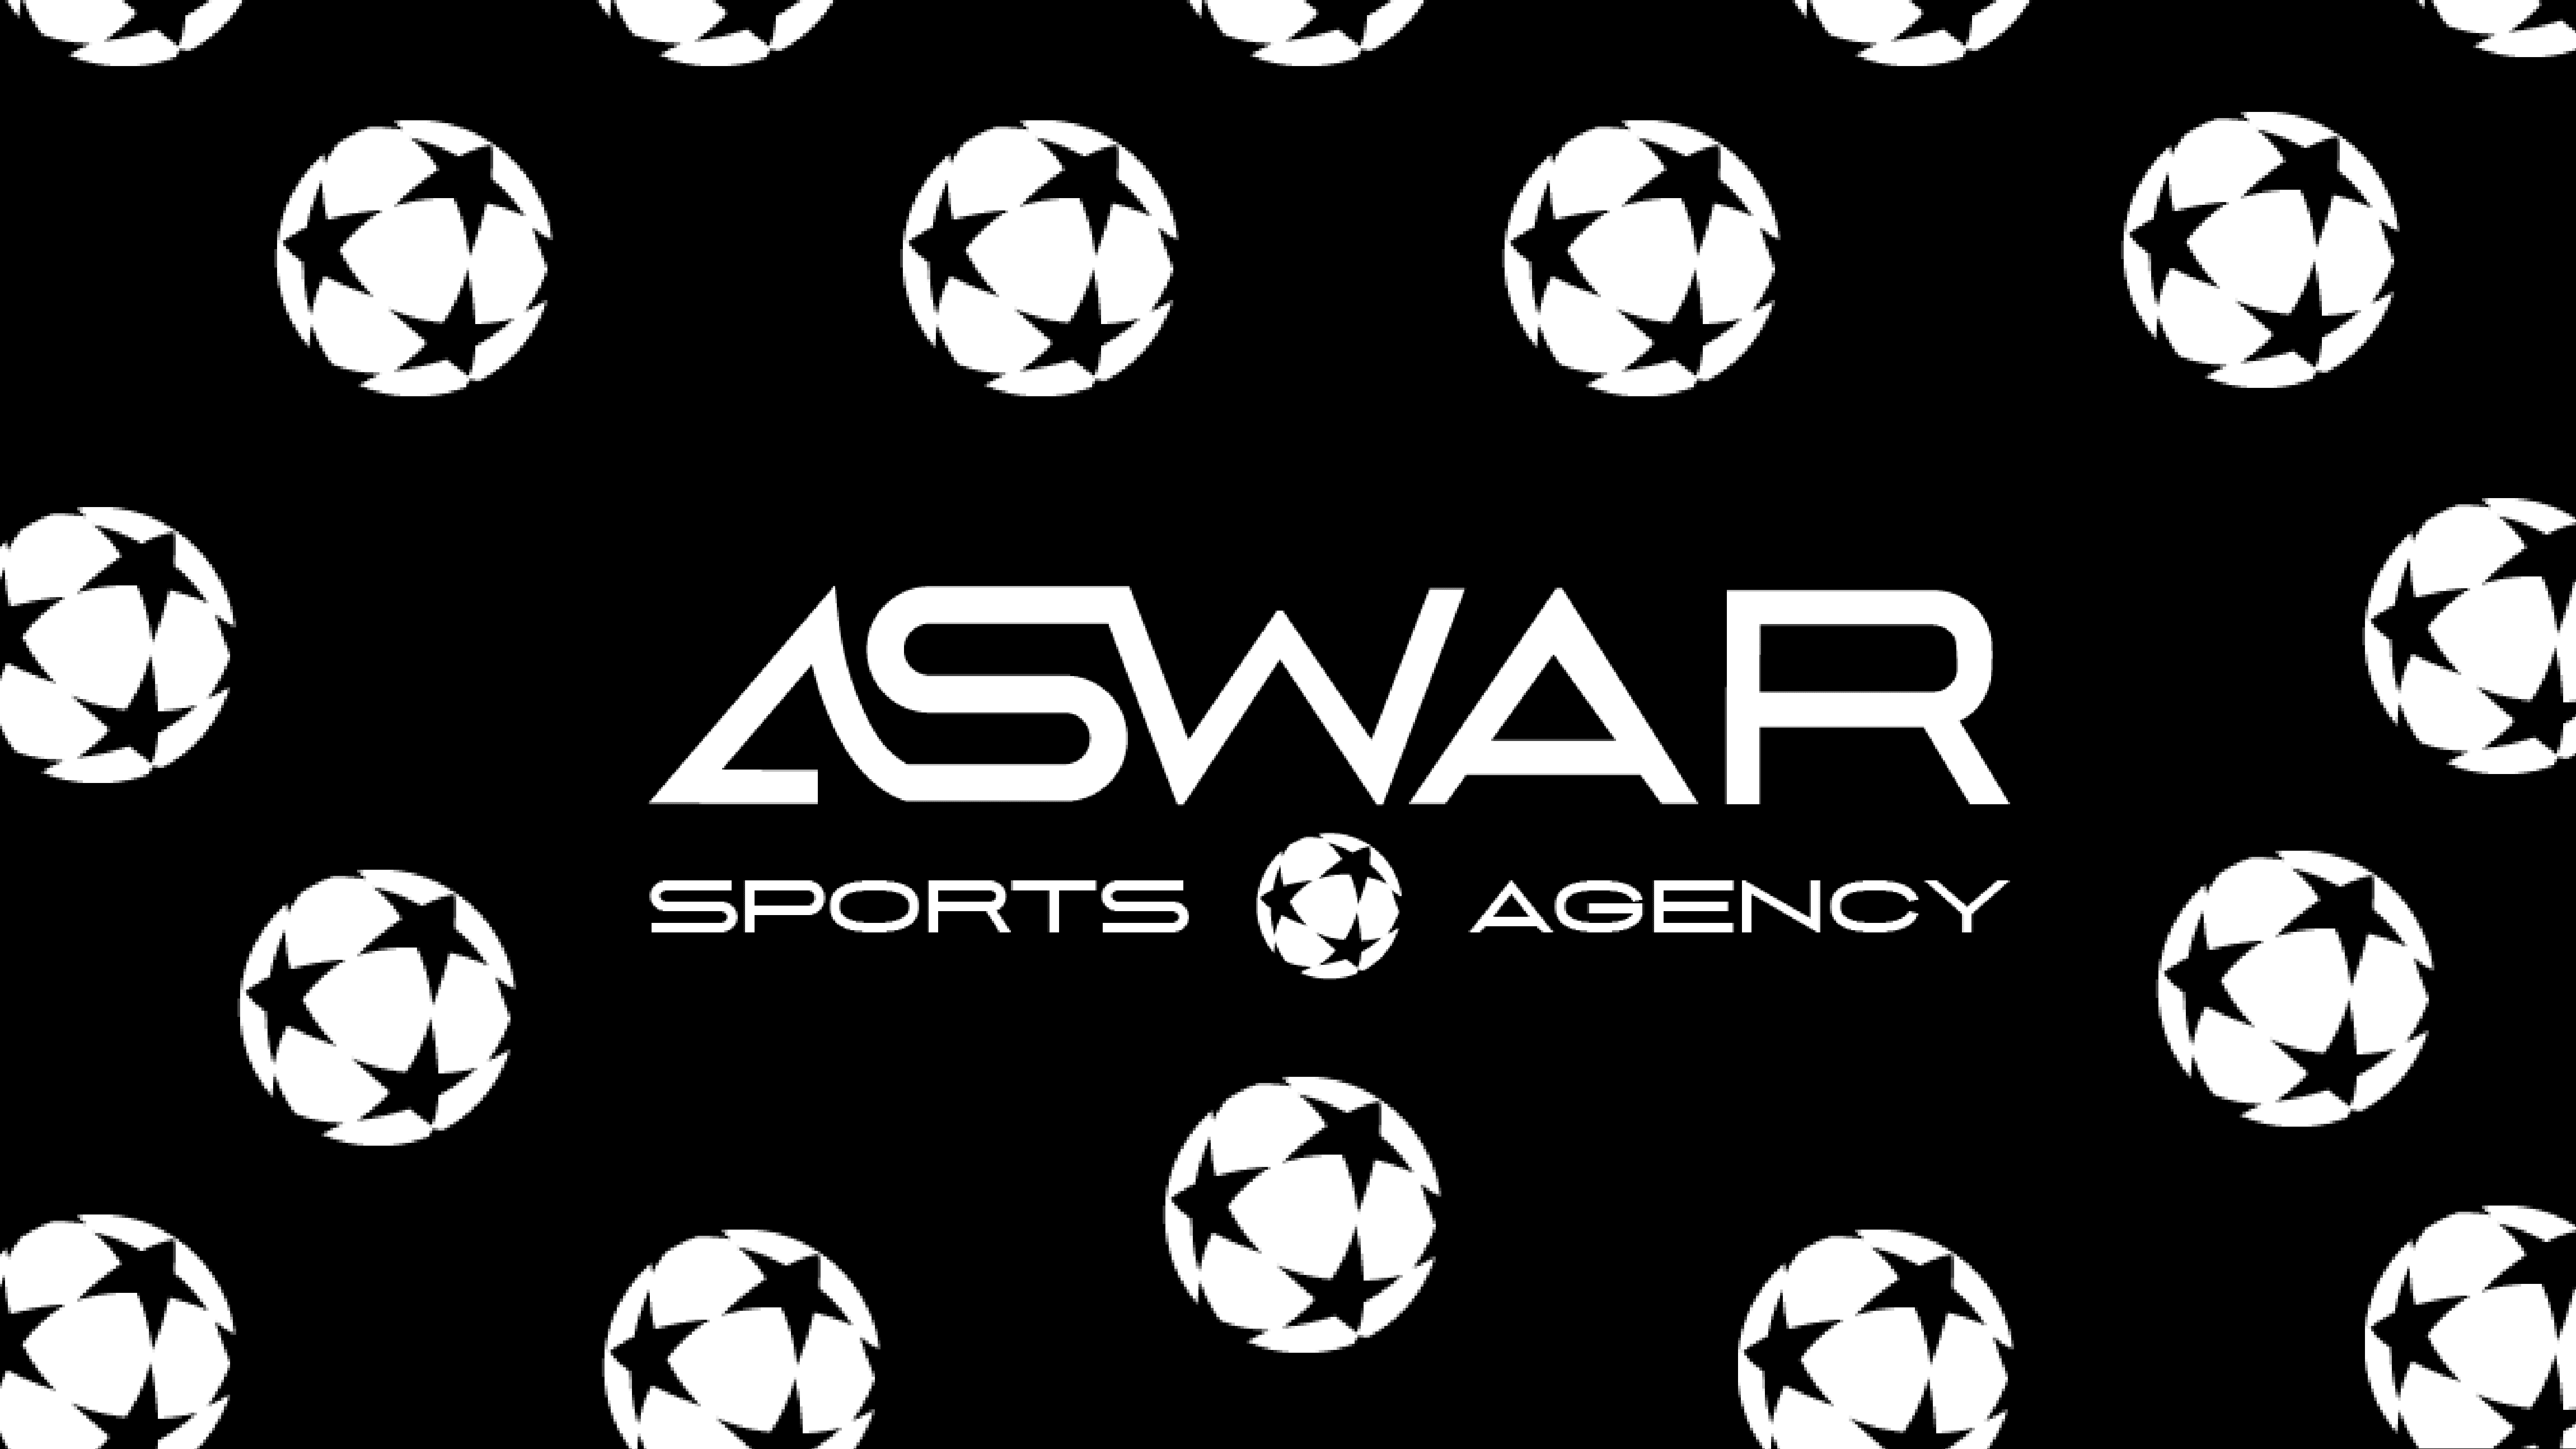 ASWAR Sports Agency – Branding